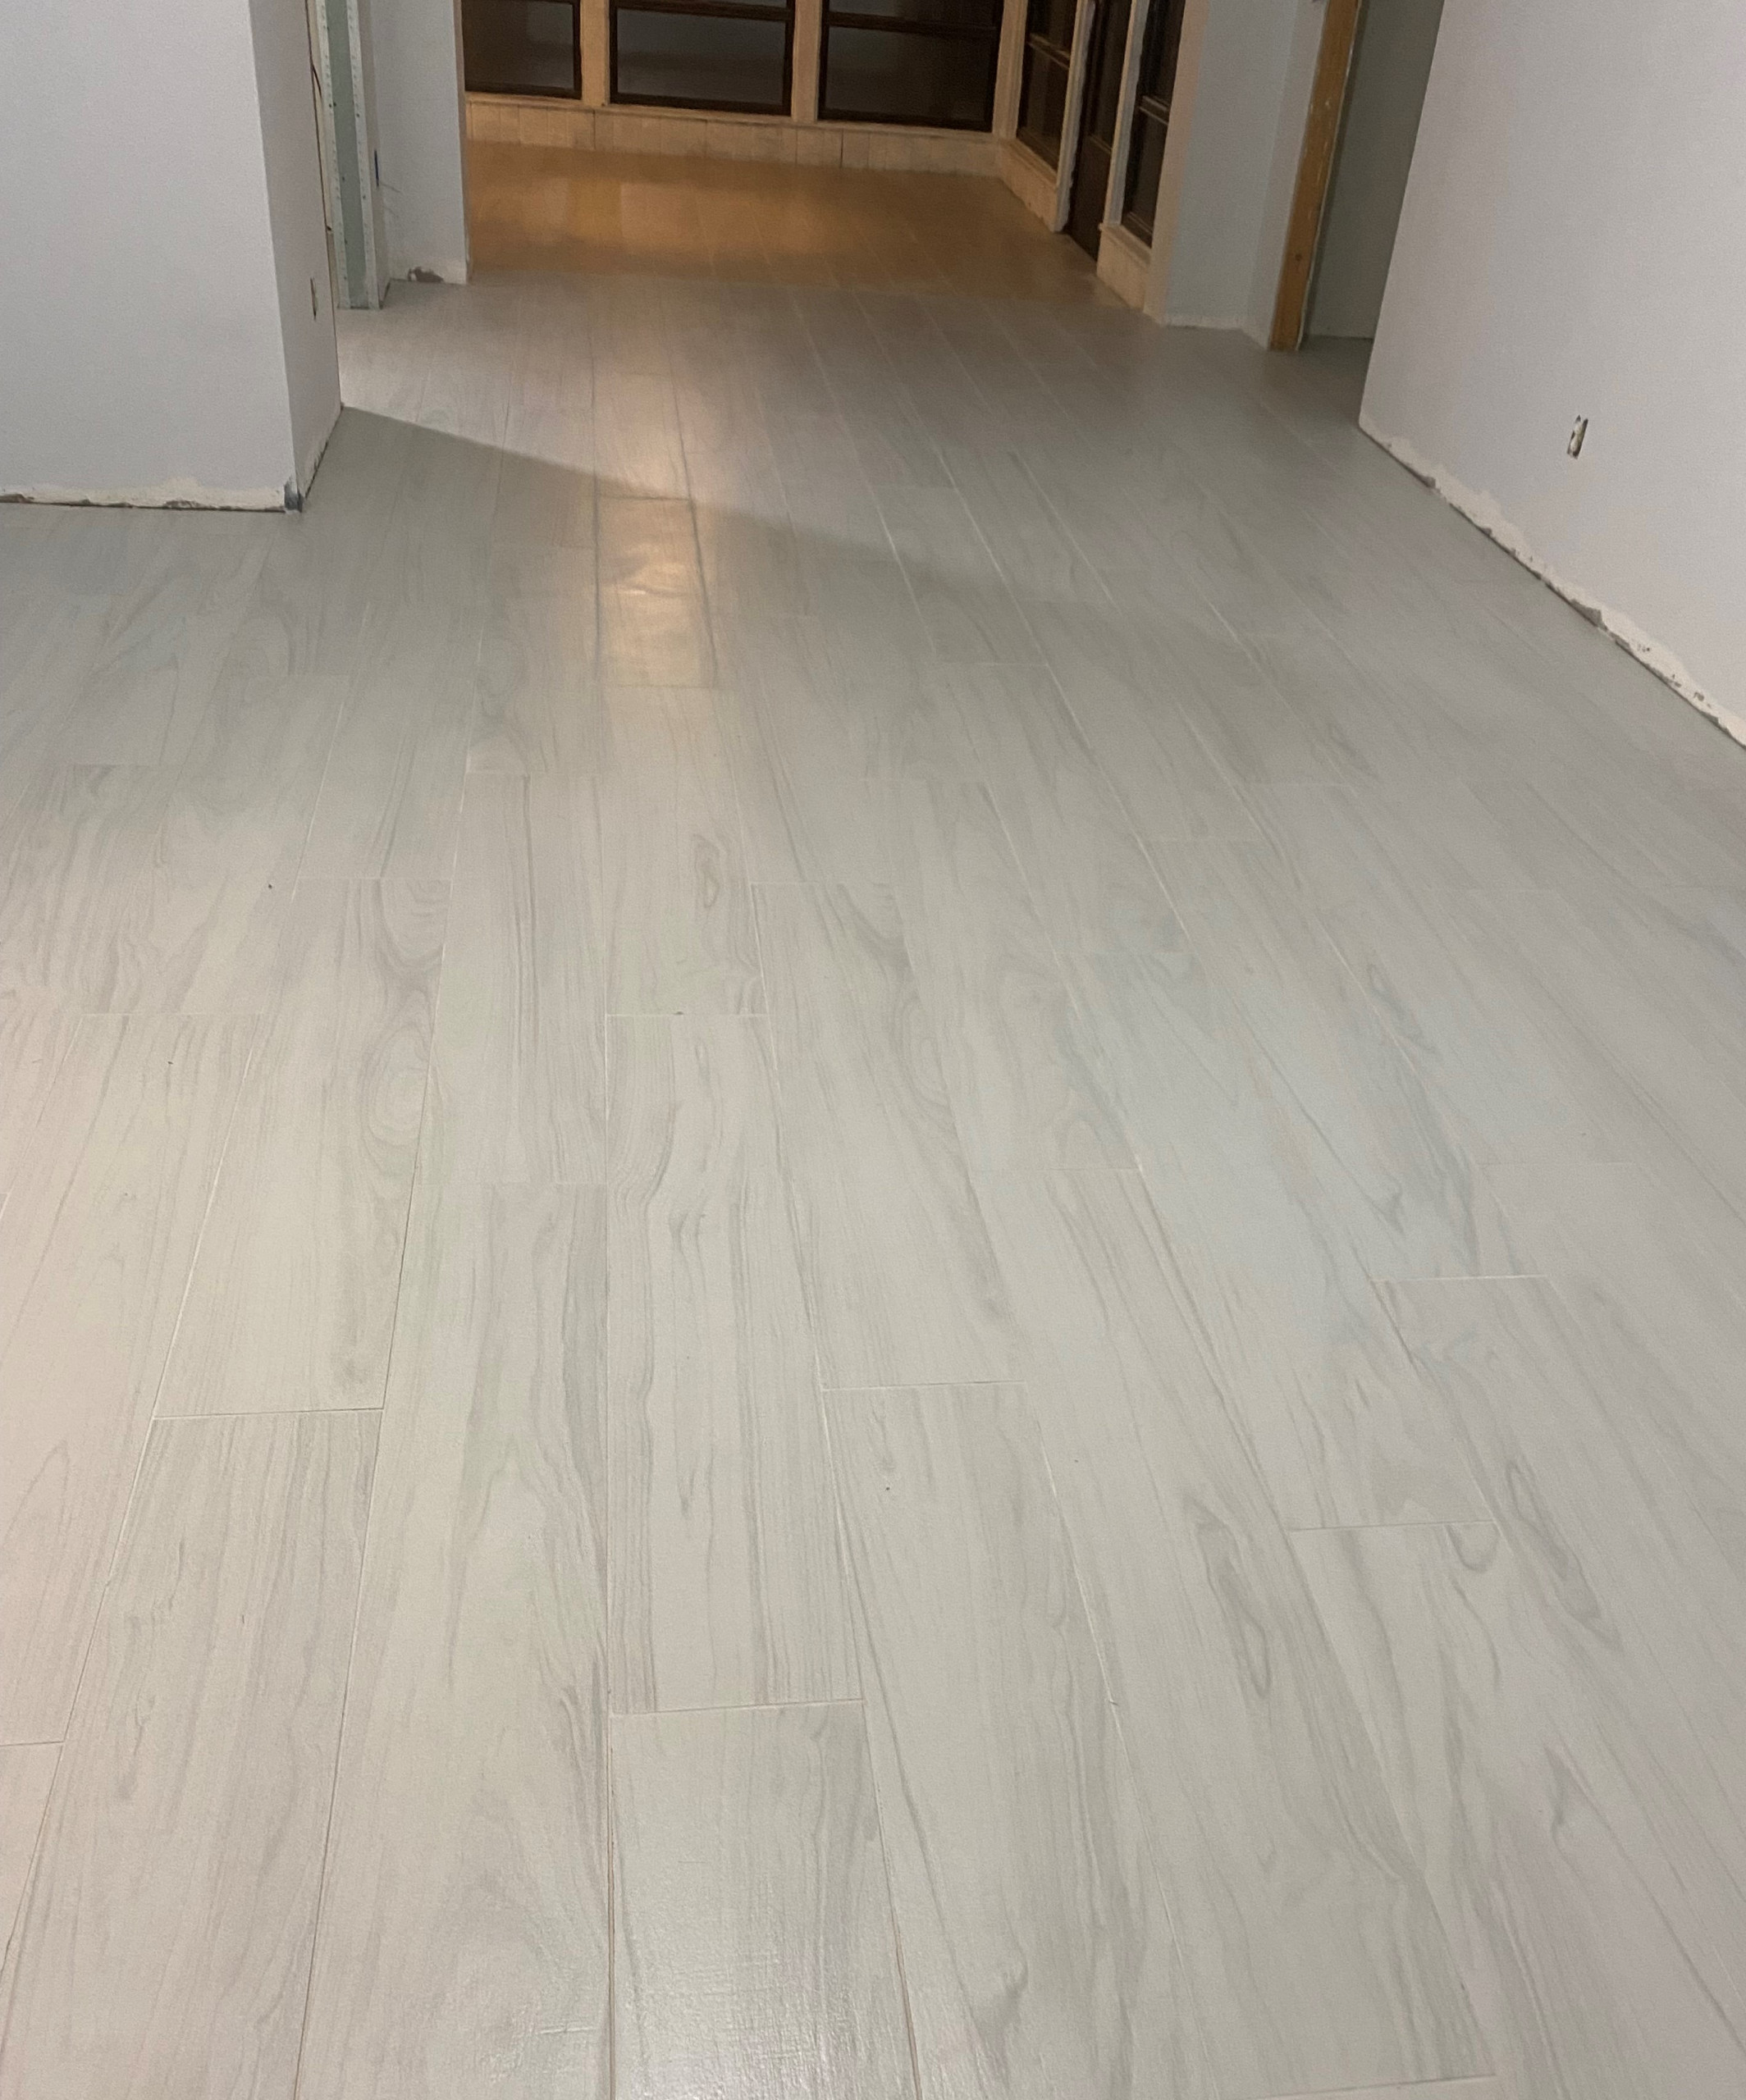 Large plank tile